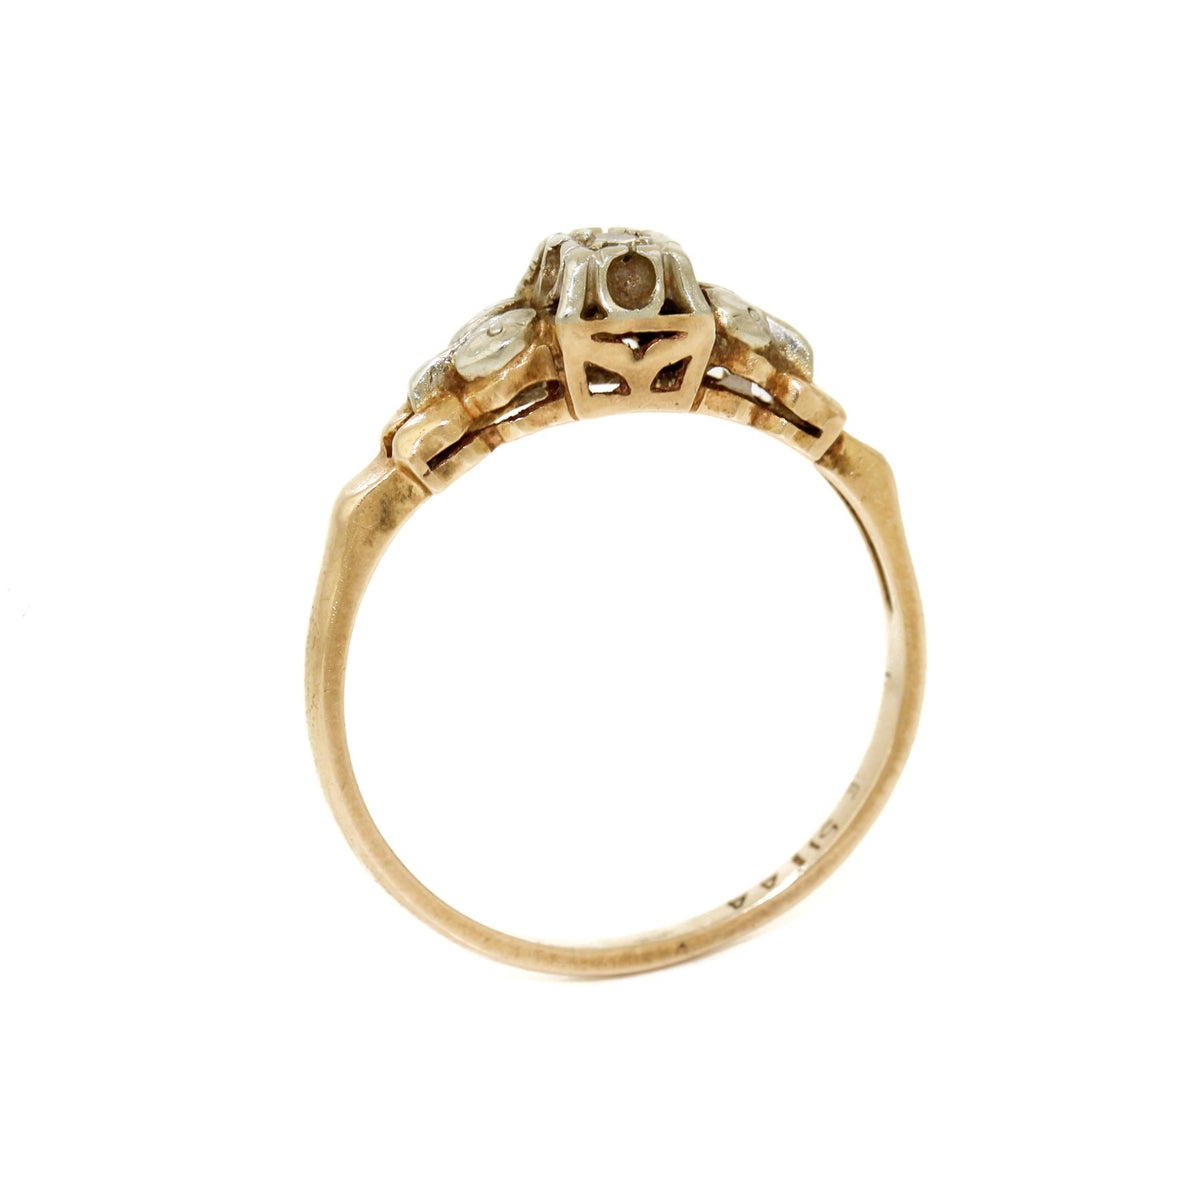 Vintage 1950's 14KT Gold x Diamond Ring - Kingdom Jewelry